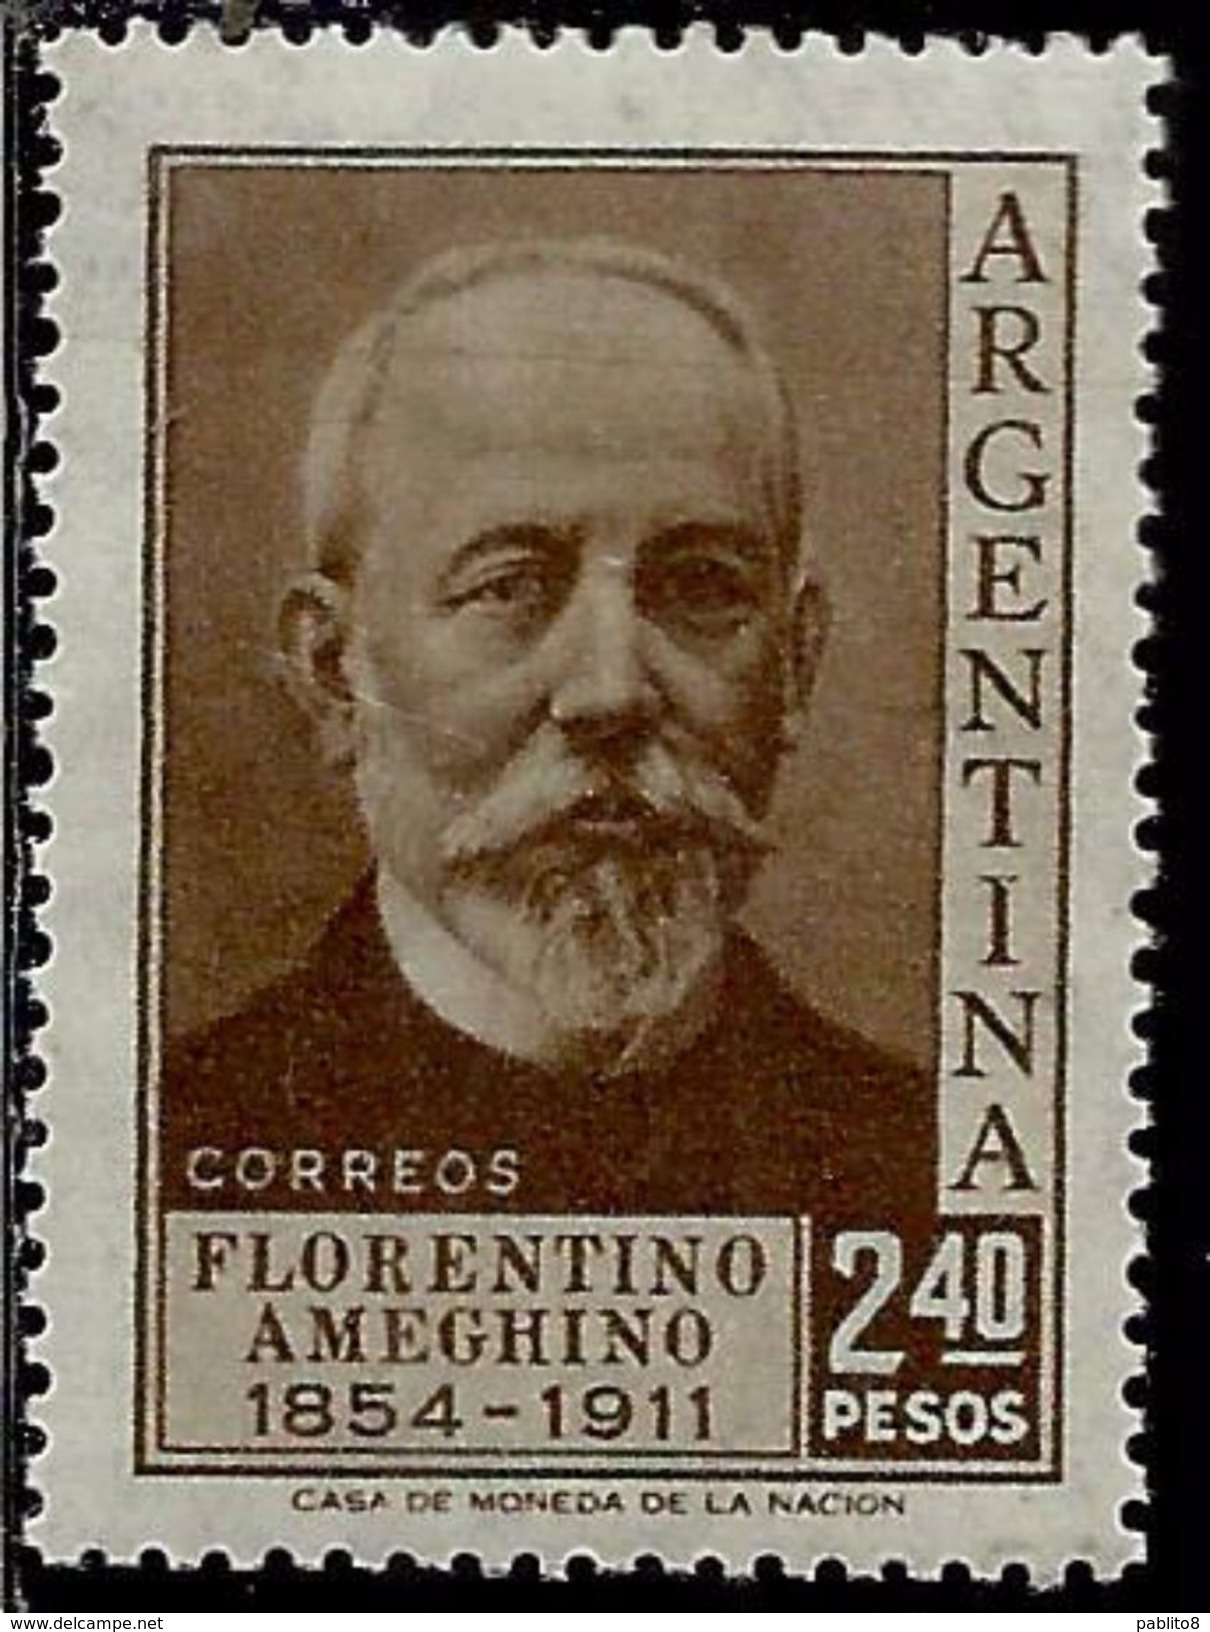 ARGENTINA 1956 Florentino Ameghino Anthropologist. PESOS 2.40p MNH - Unused Stamps